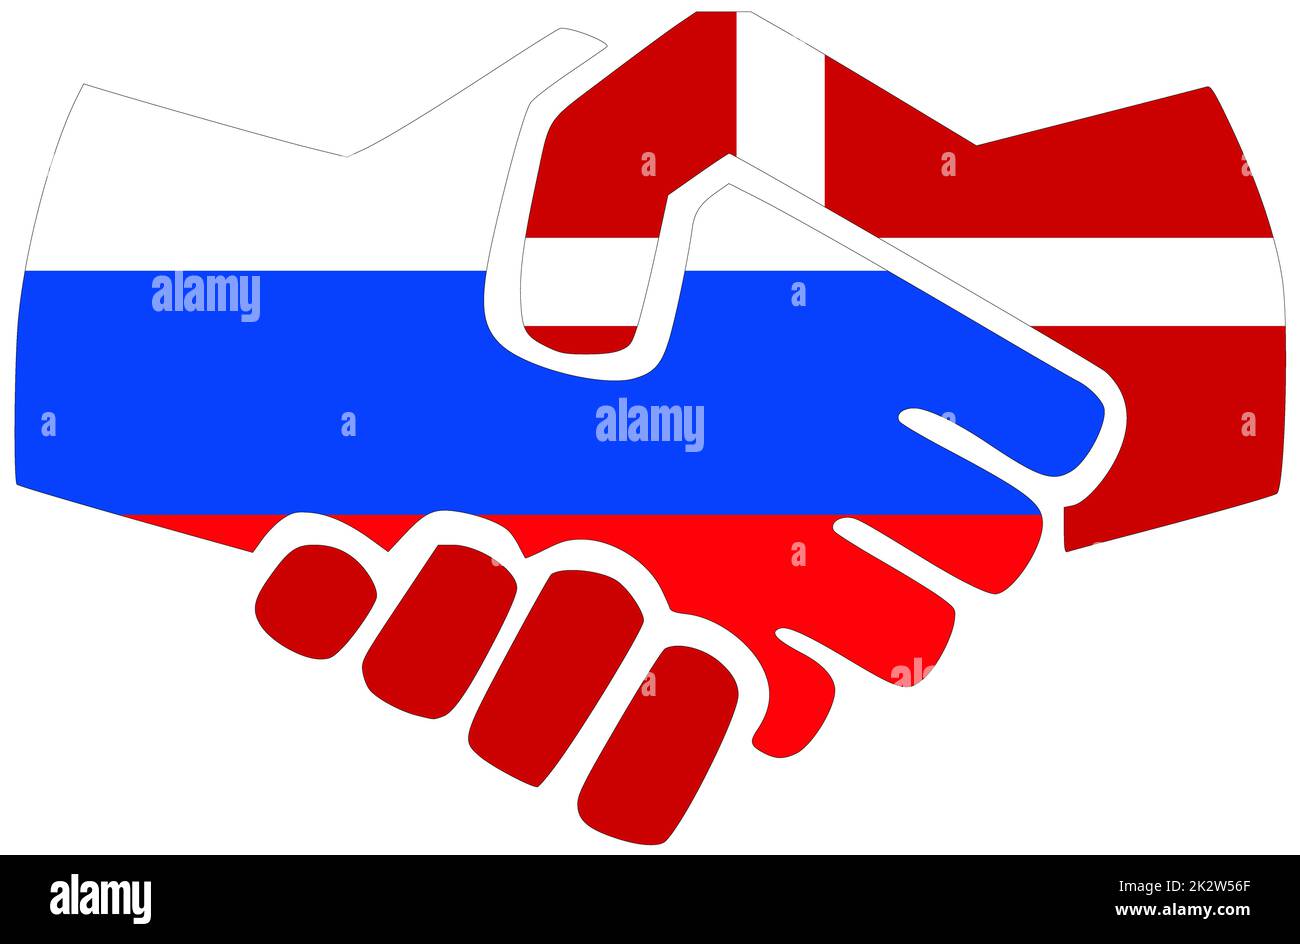 Russia - Denmark : Handshake, symbol of agreement or friendship Stock Photo